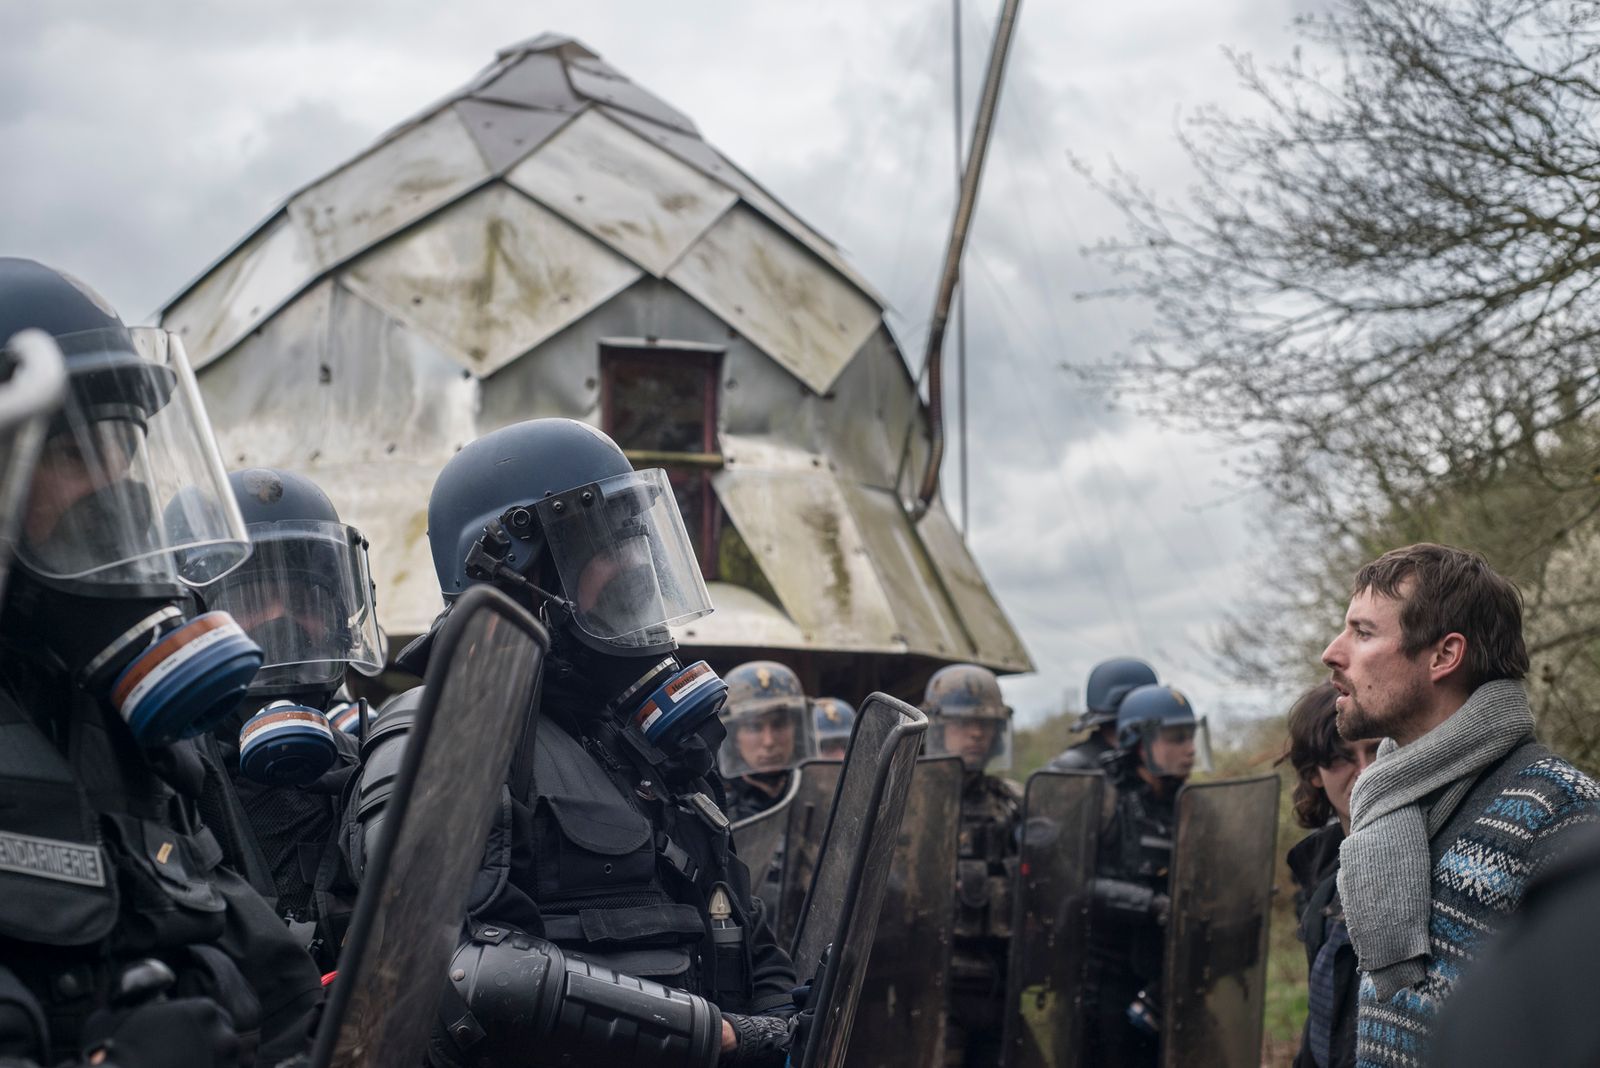 © Penelope Thomaidi - An inhabitant confronting the police at 100 Noms farm, ZAD of Notre Dame des Landes, France, April 9th, 2018.